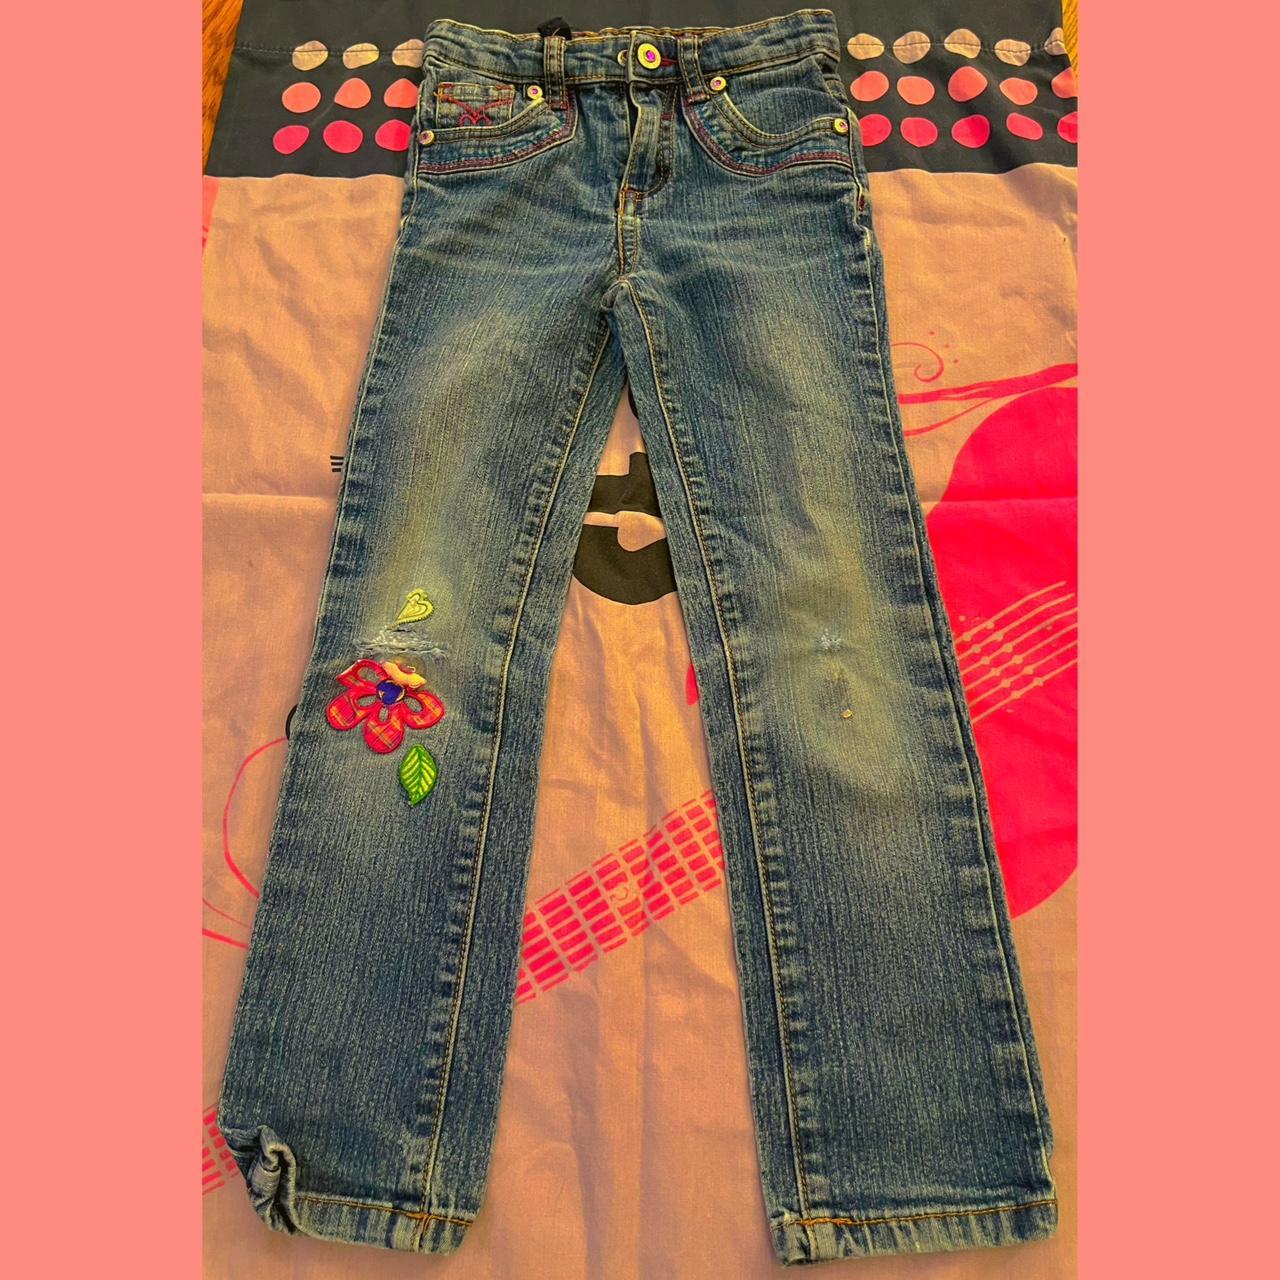 Y2K Arizona Jeans, pink stitching, flower patch on - Depop